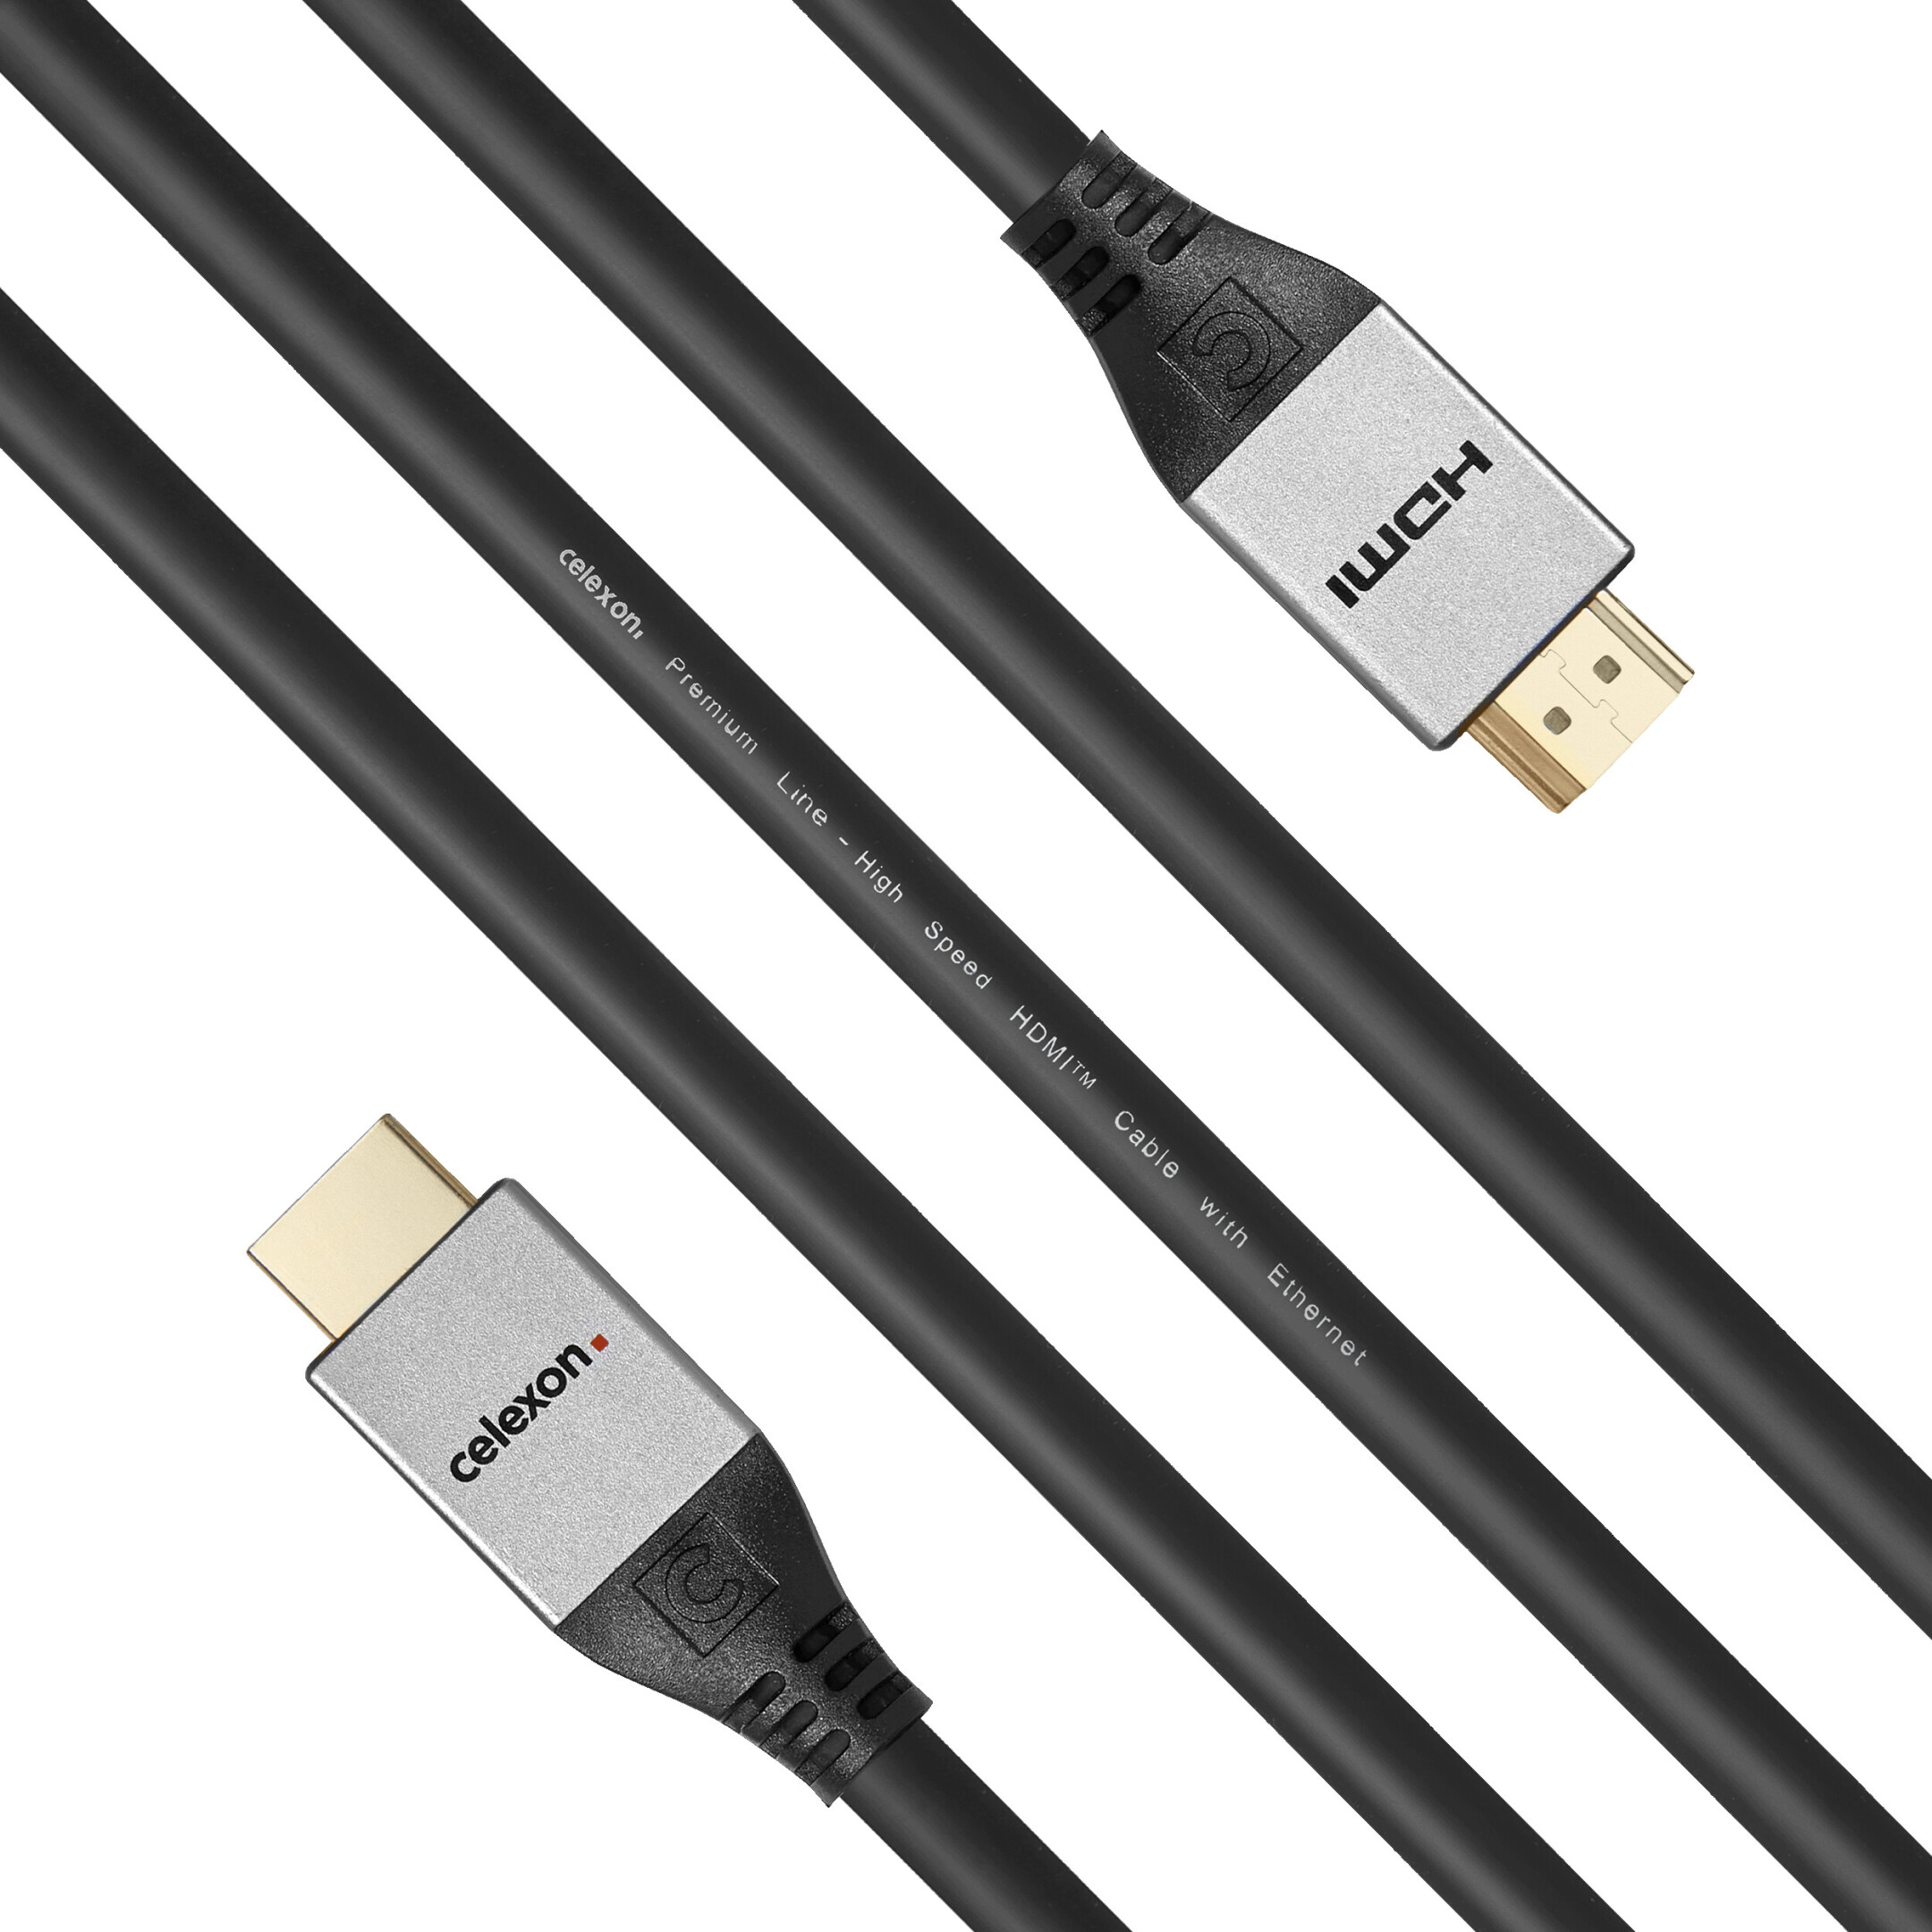 celexon-HDMI-kabel-met-Ethernet-2-0a-b-4K-10-0m-Professional